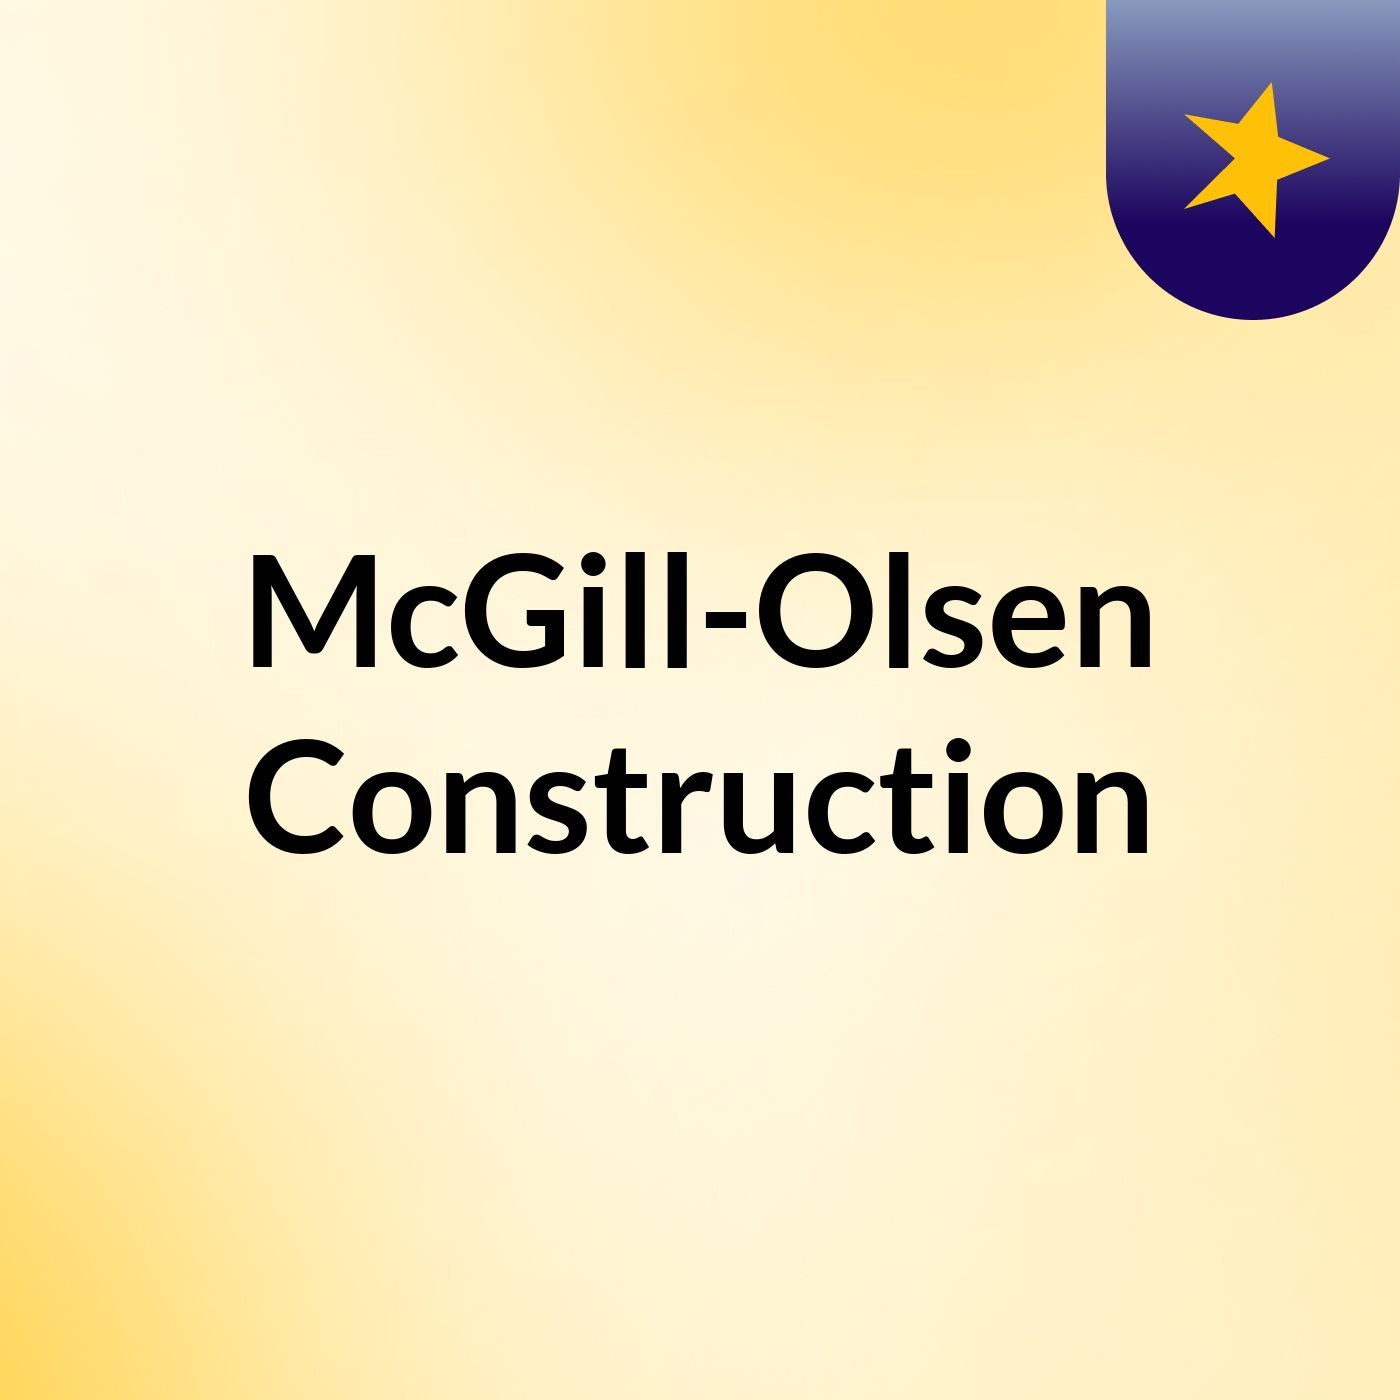 McGill-Olsen Construction